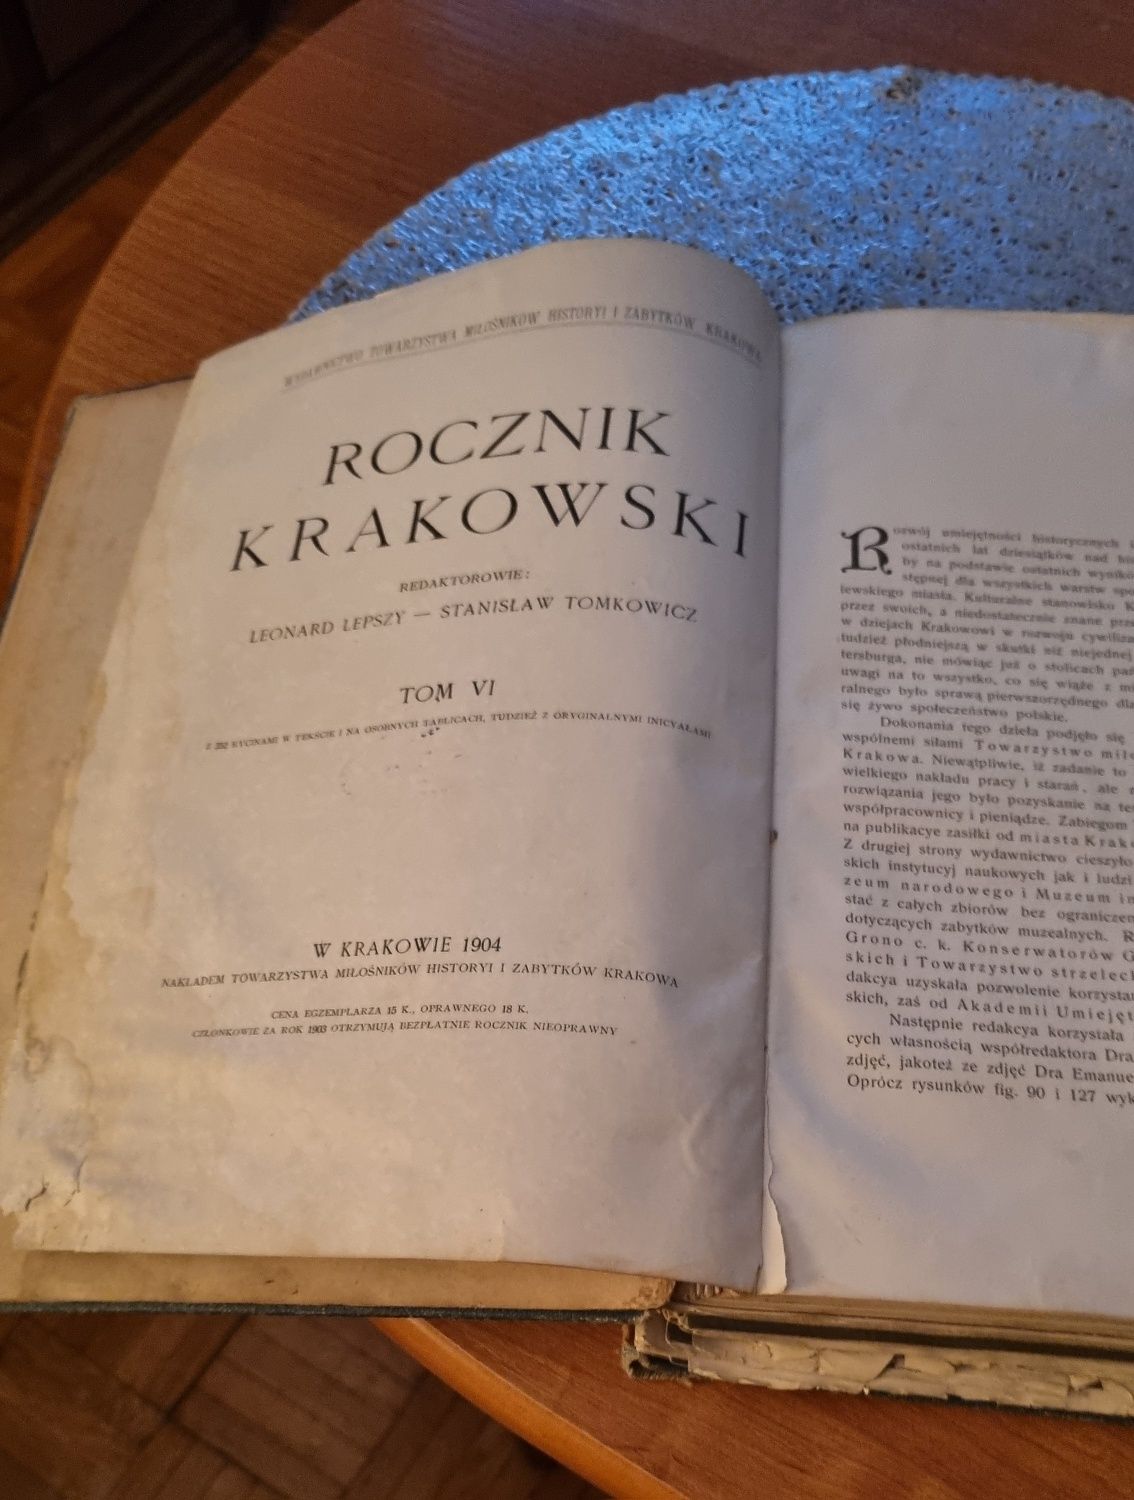 Rocznik krakowski  1904 Tom VI